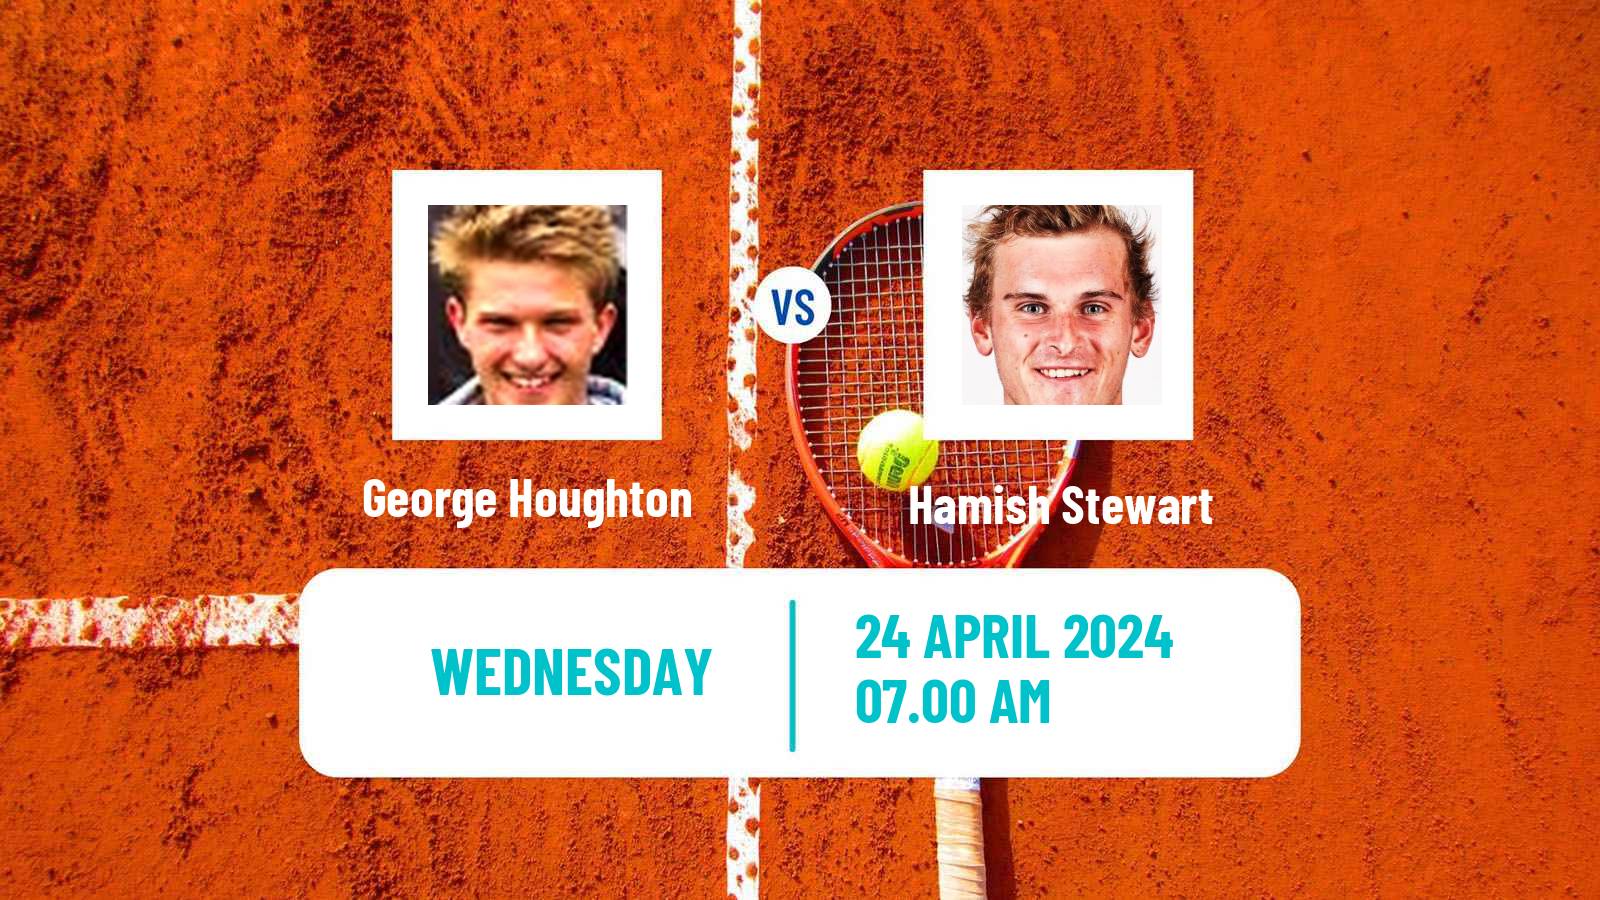 Tennis ITF M25 Nottingham Men George Houghton - Hamish Stewart